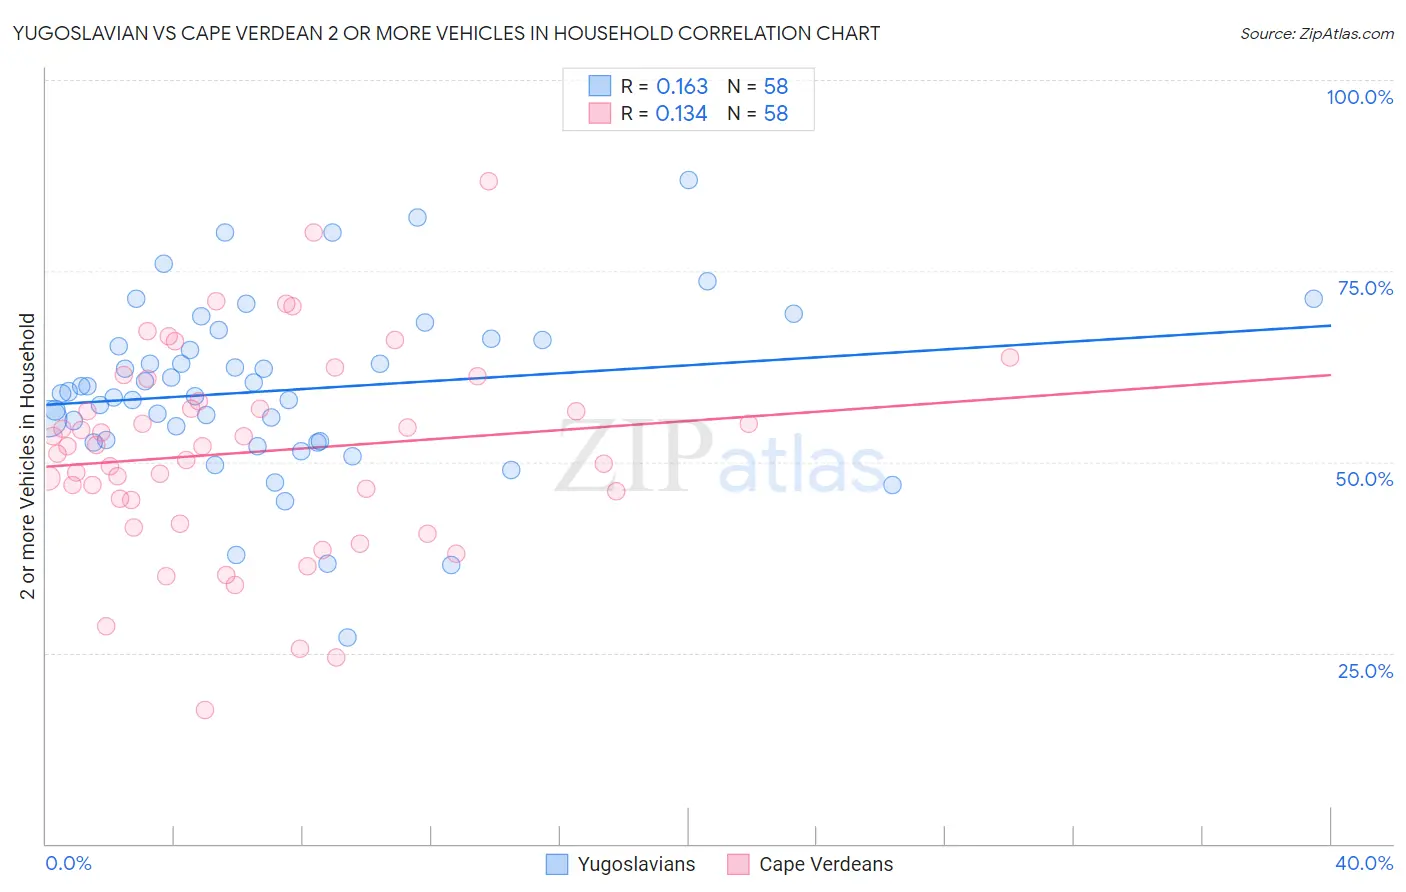 Yugoslavian vs Cape Verdean 2 or more Vehicles in Household